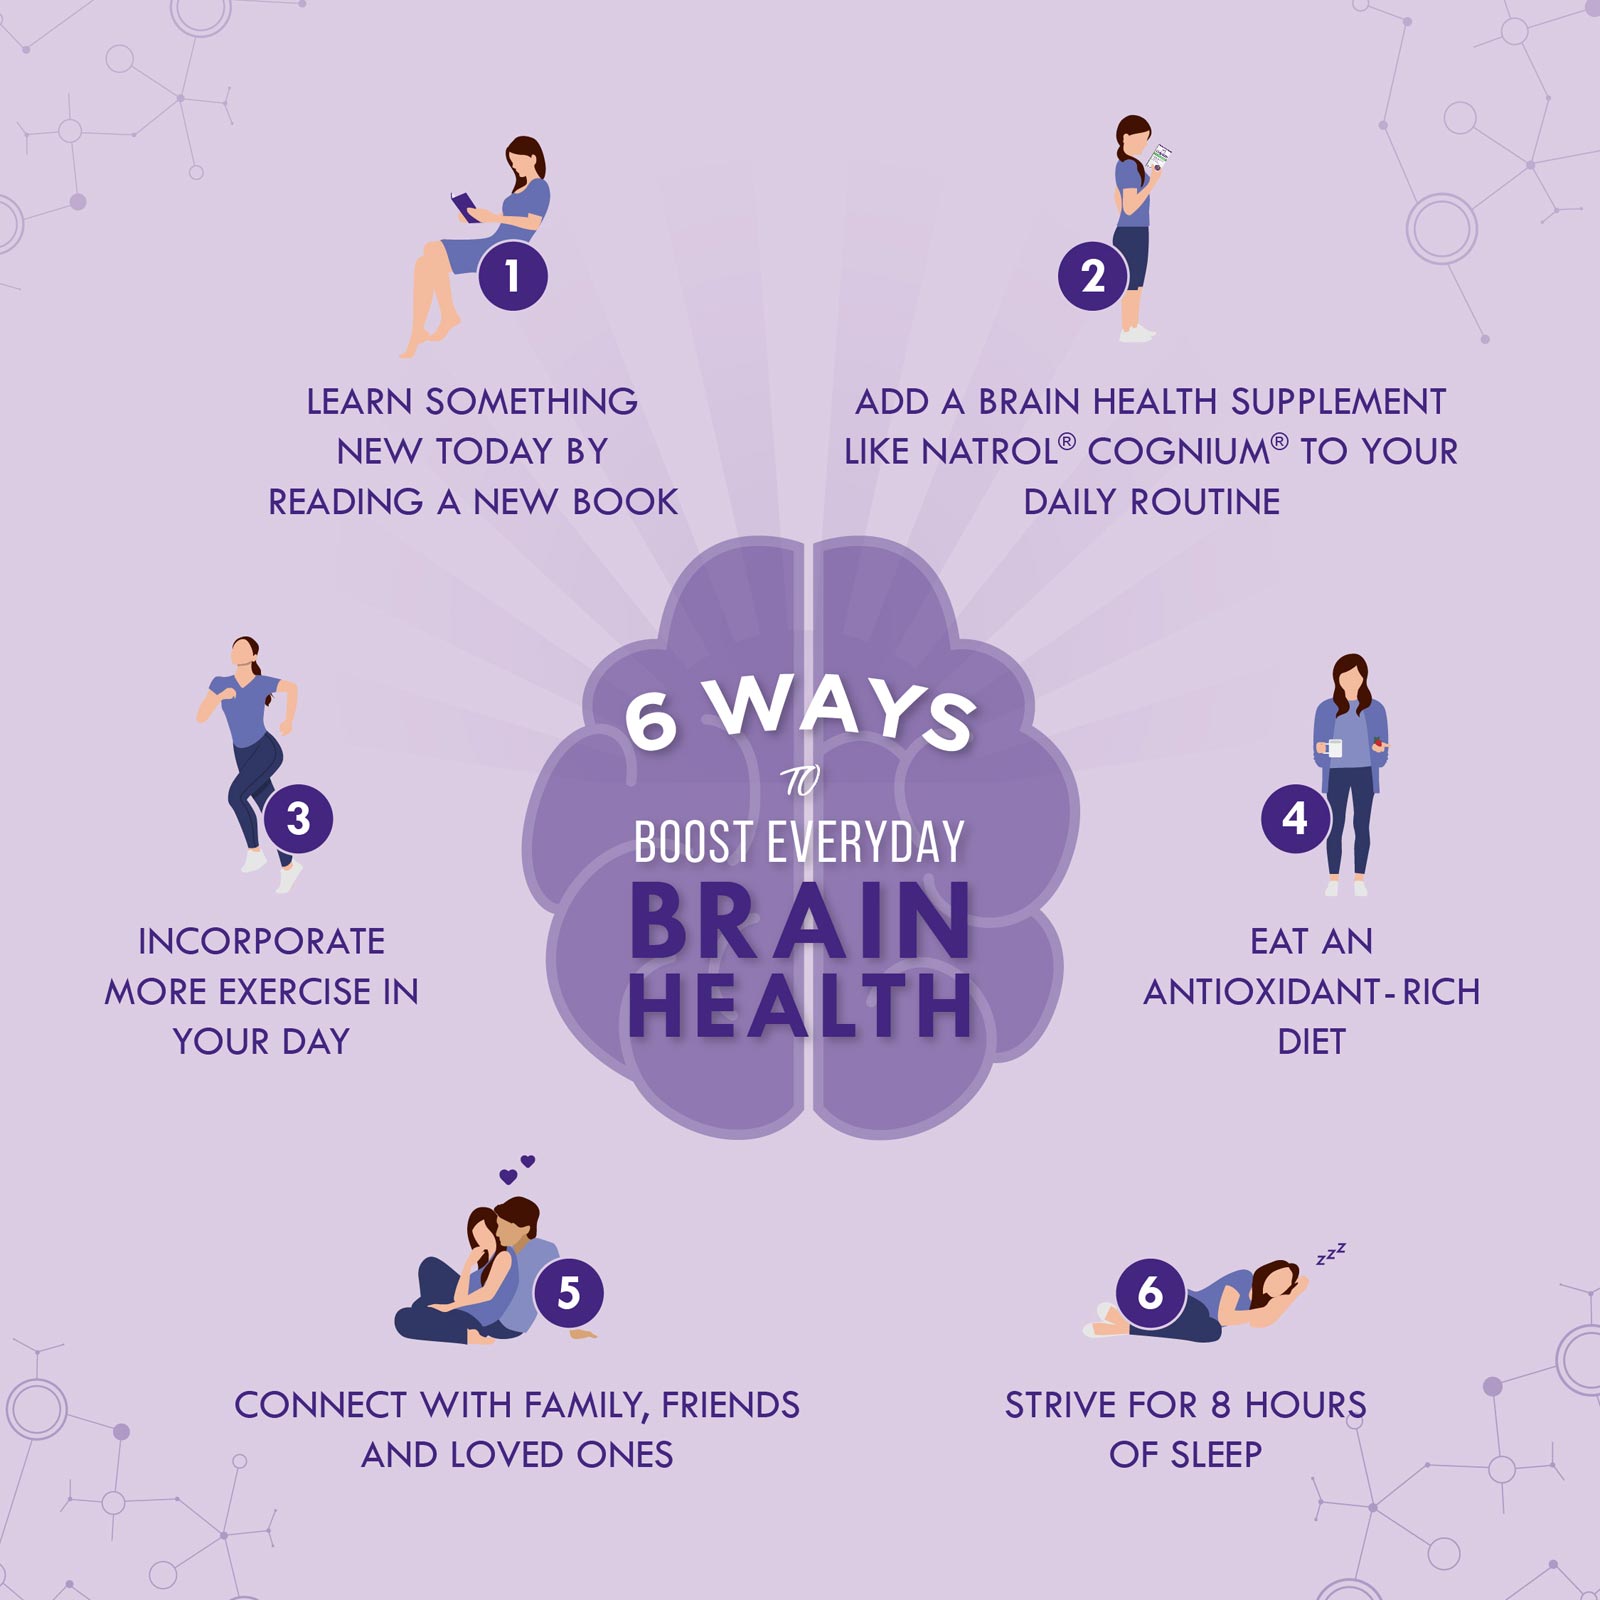 Natrol “6 Ways to Boost Everyday Brain Health”